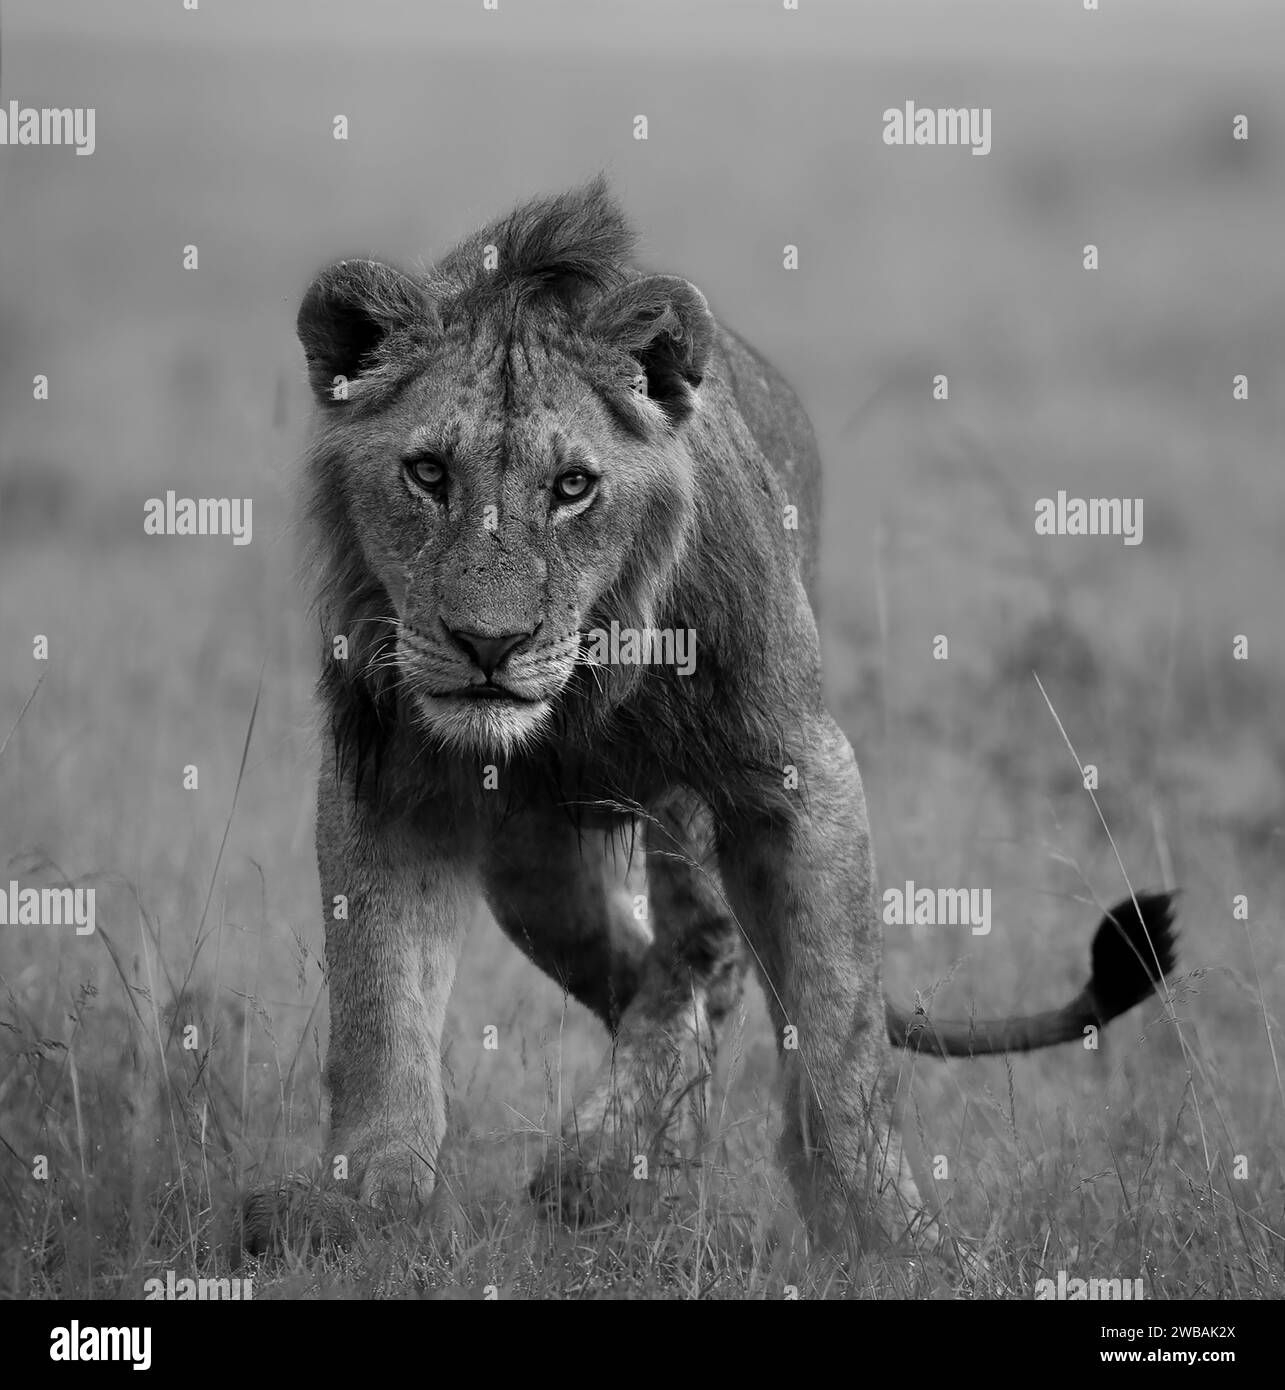 A grayscale of a majestic African lion striding across a savanna grassland. Stock Photo